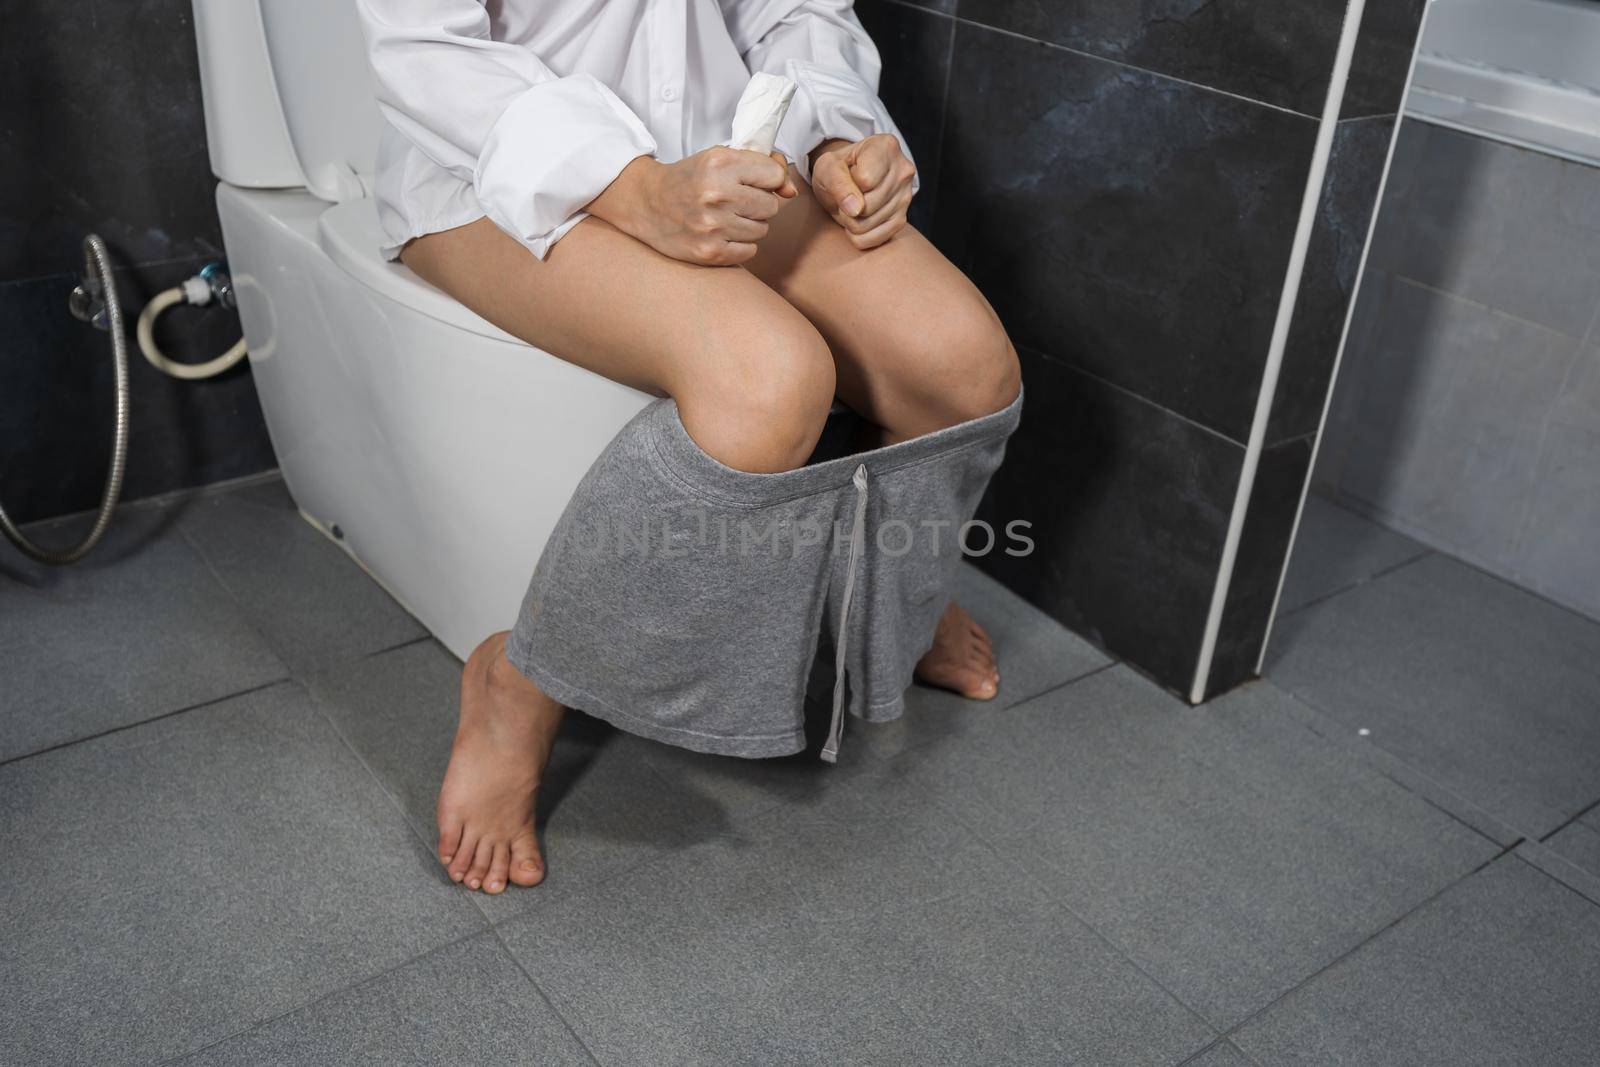 woman sitting on toilet by geargodz